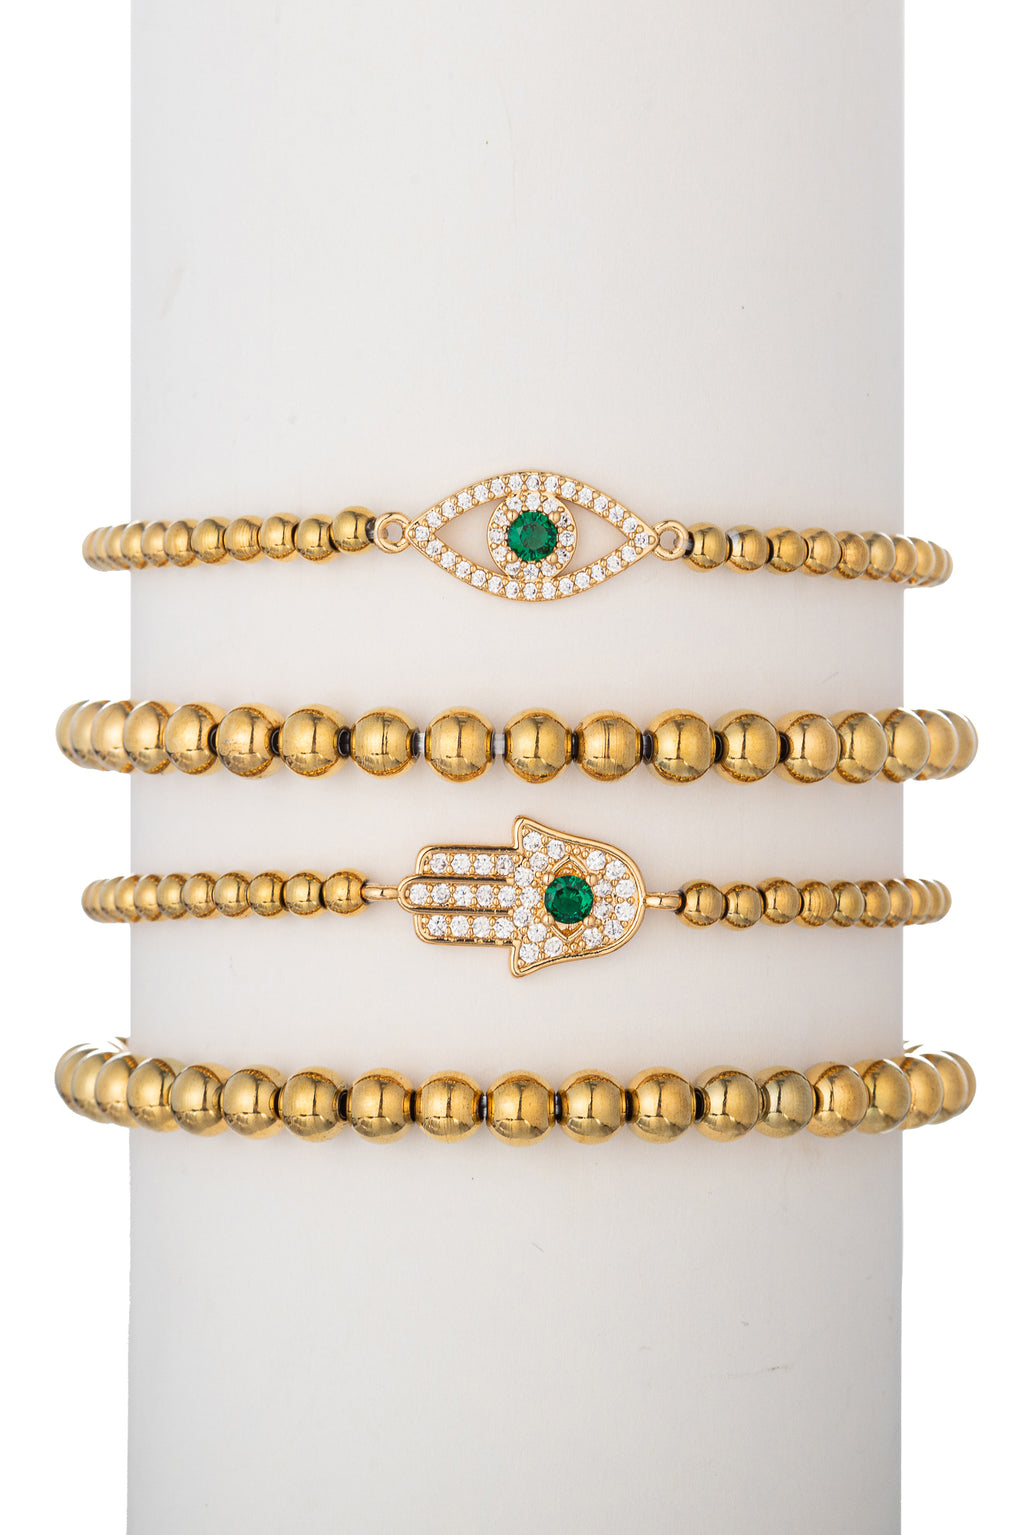 Gold tone titanium beaded bracelet set with green CZ crystal evil eye and hamsa hand pendants.